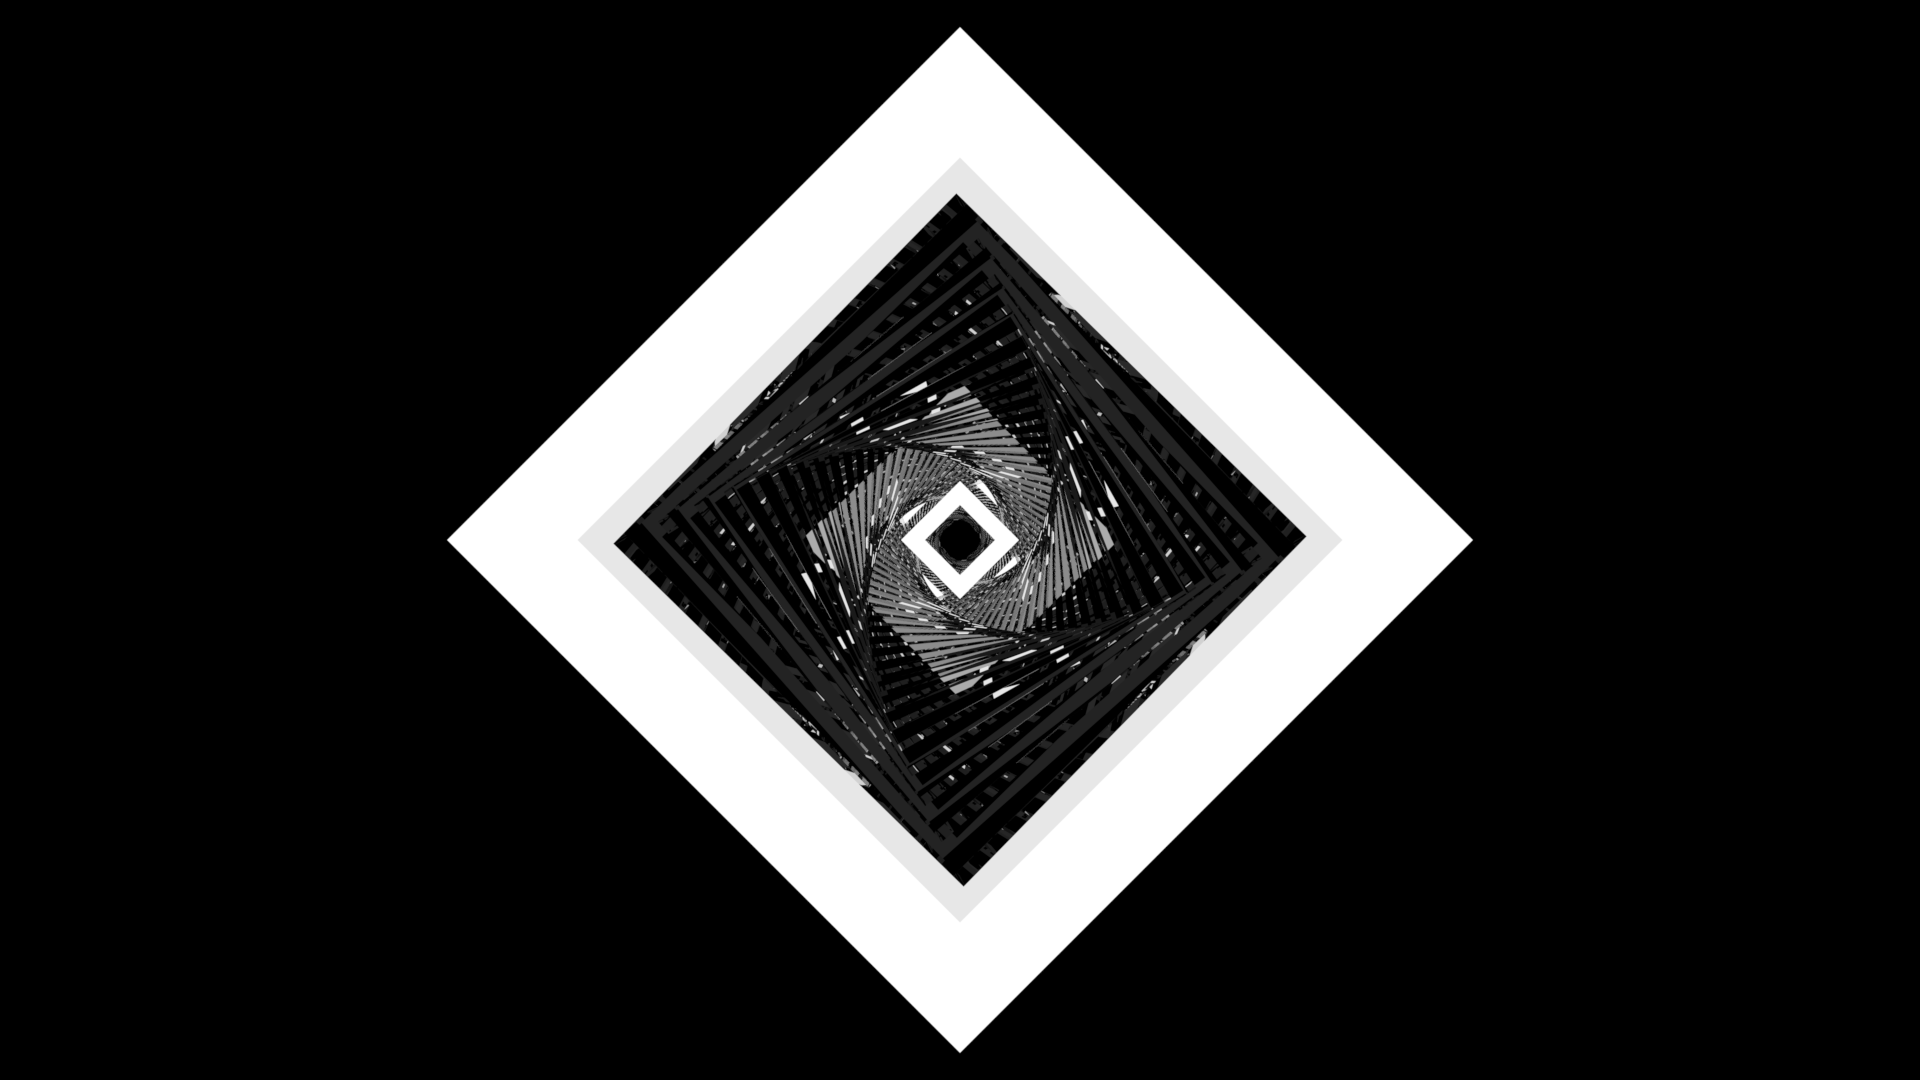 Black Amp White Square 1920x1080